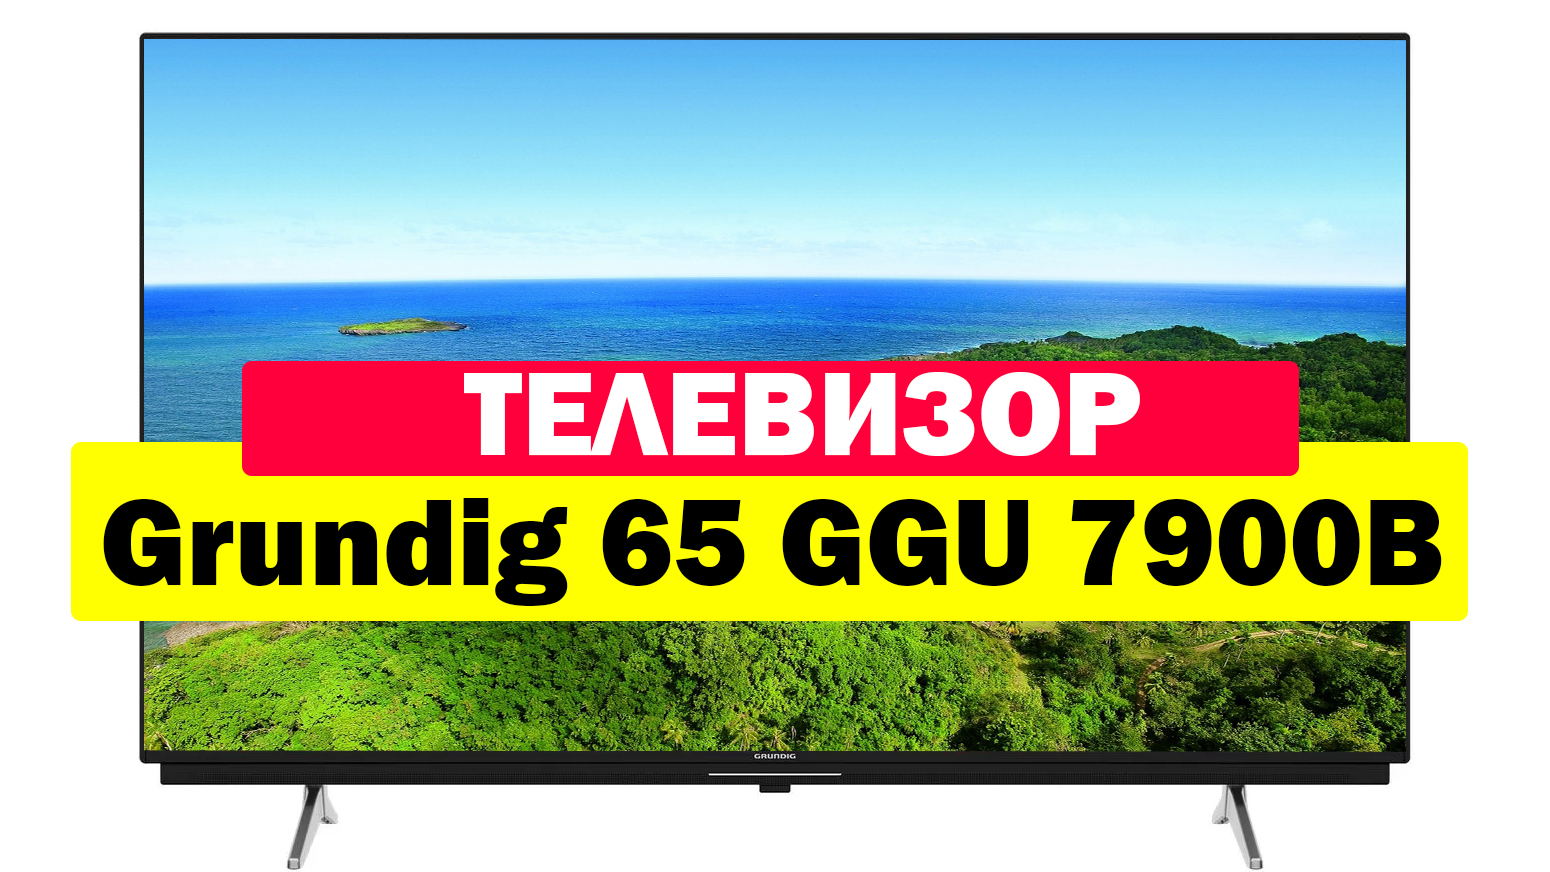 Grundig телевизор ggu 8960. Grundig 65. Grundig телевизор. Телевизор Grundig 55 GGU 7900b подсветка. Телевизор Grundig 65 GGU 7970a.